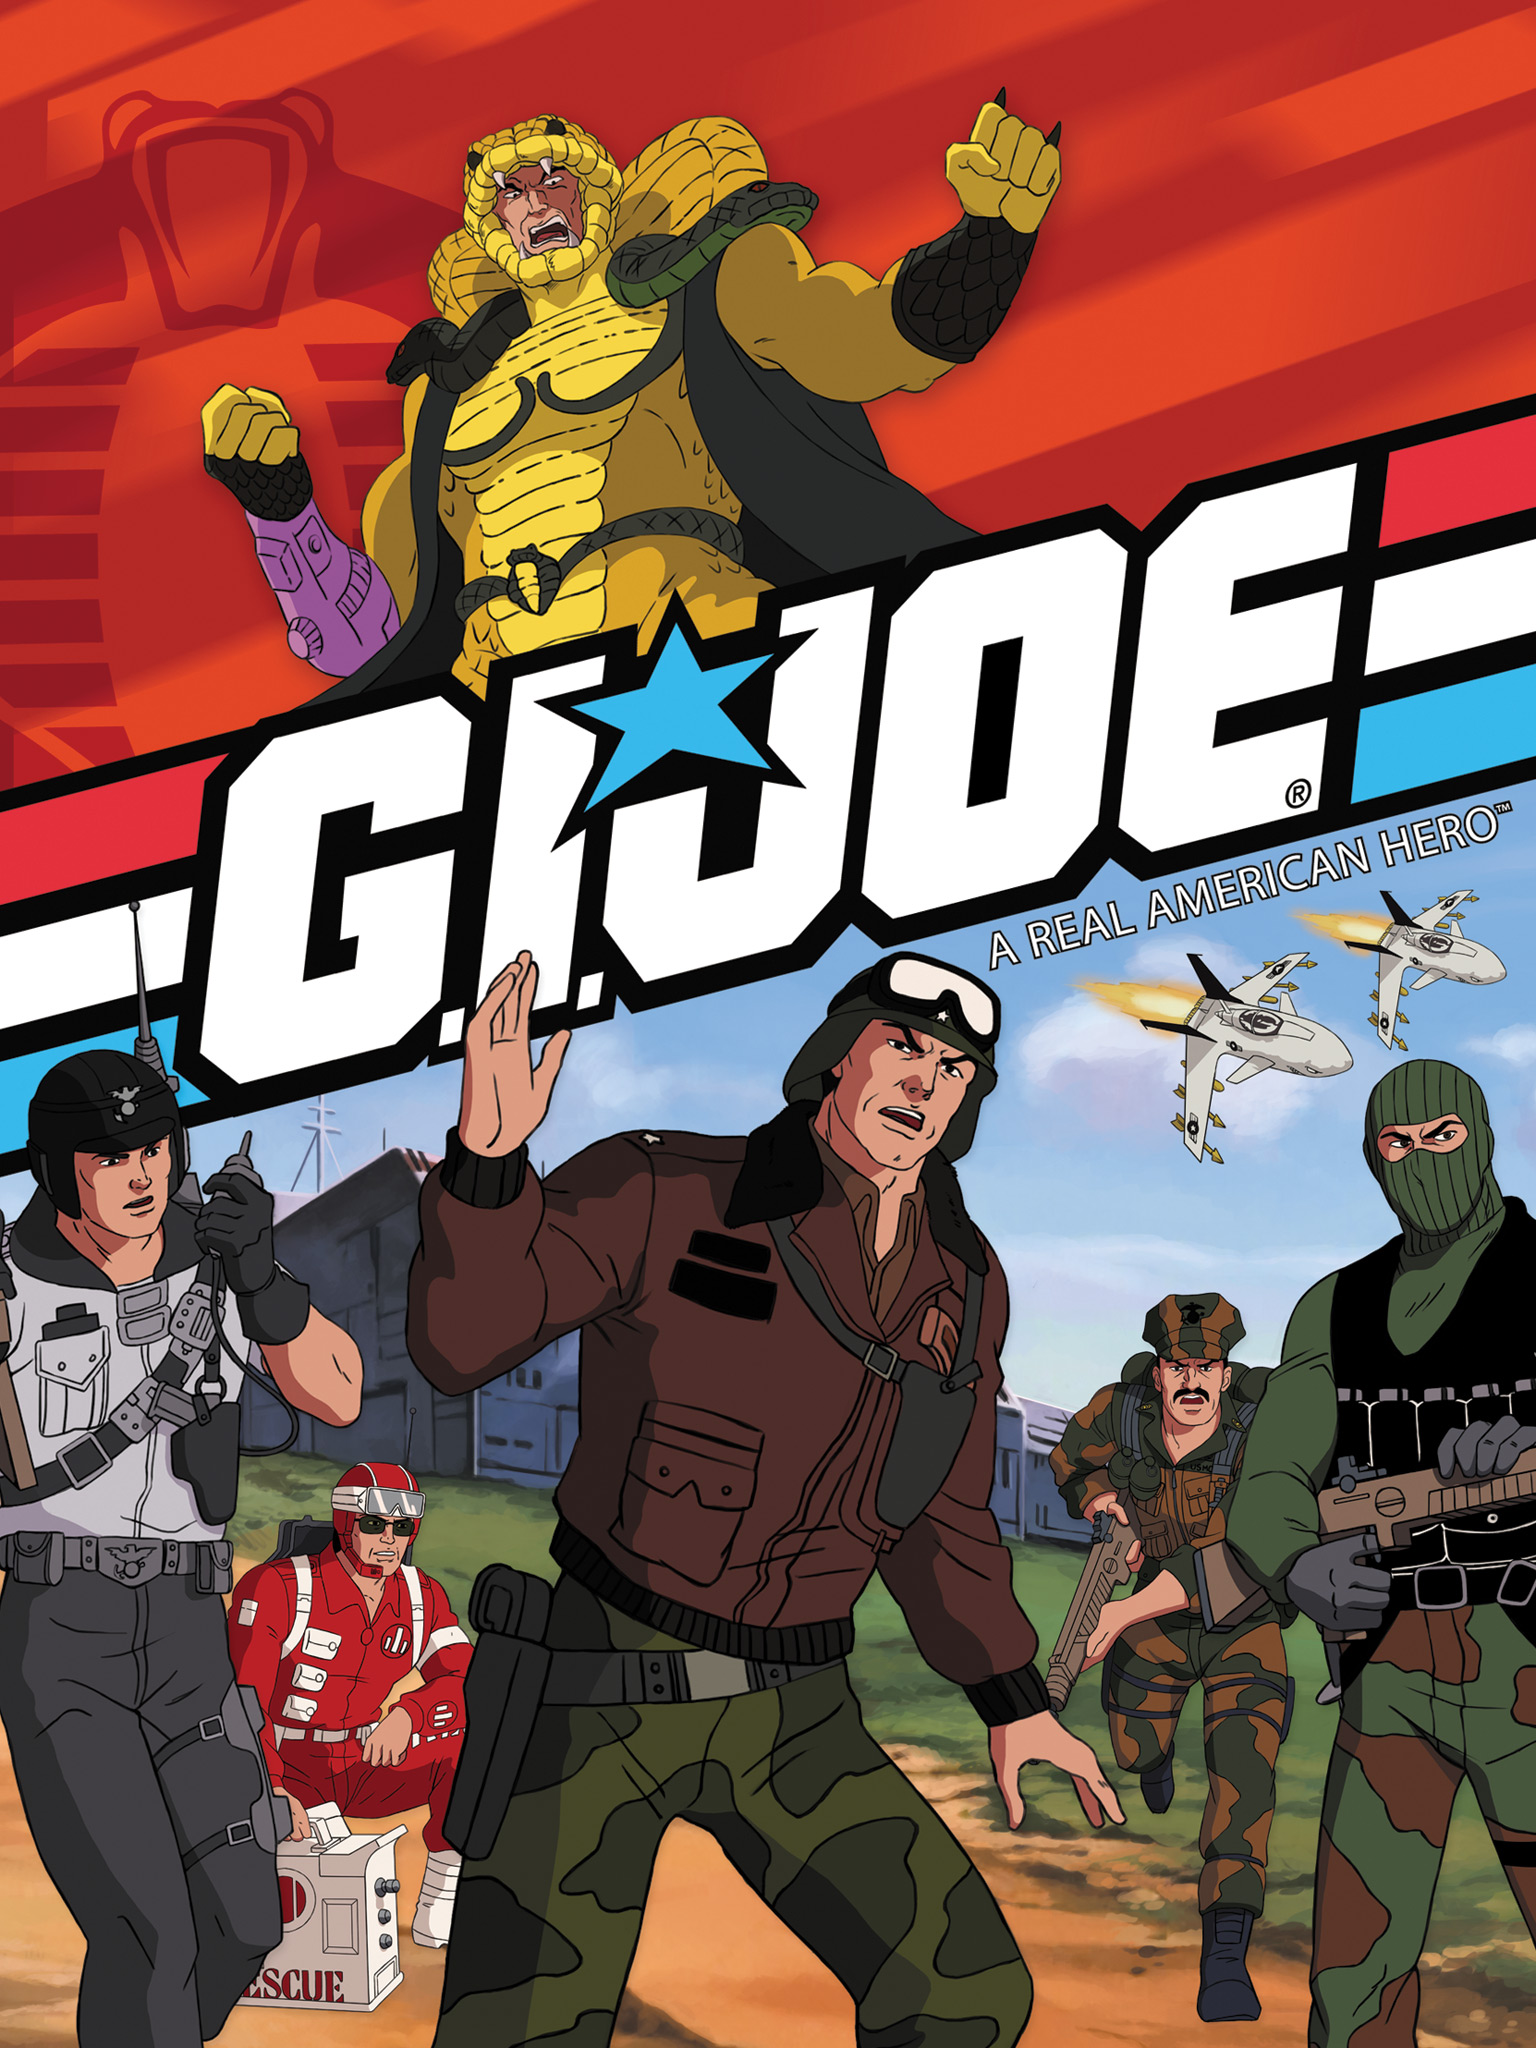 G.I. Joe (1983 - 1986) Full animated series S1 en S2 compleet.